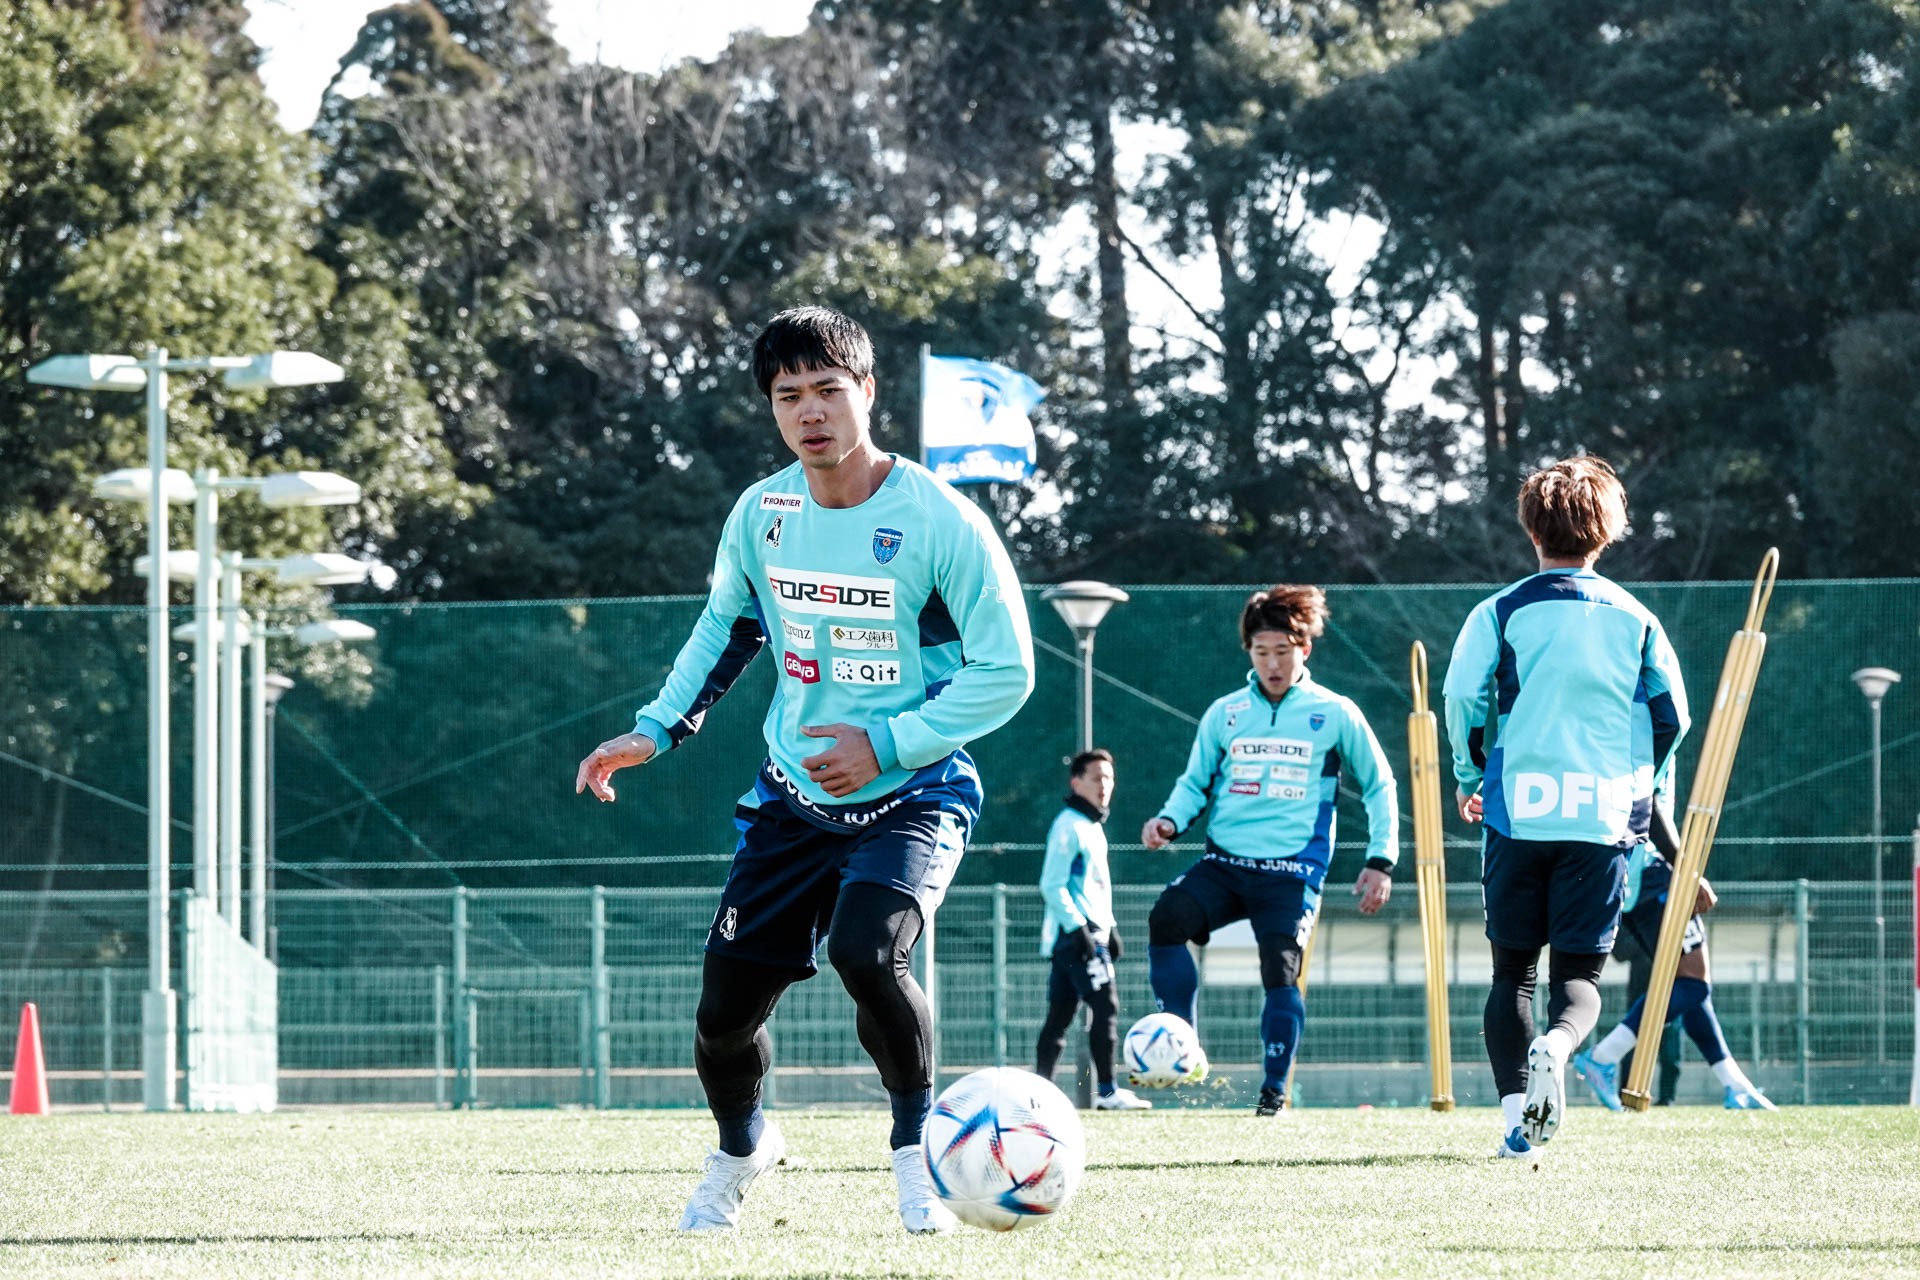 Cong Phuong เข้ากันได้ดีในญี่ปุ่น  ภาพถ่าย: “FC Yokohama”